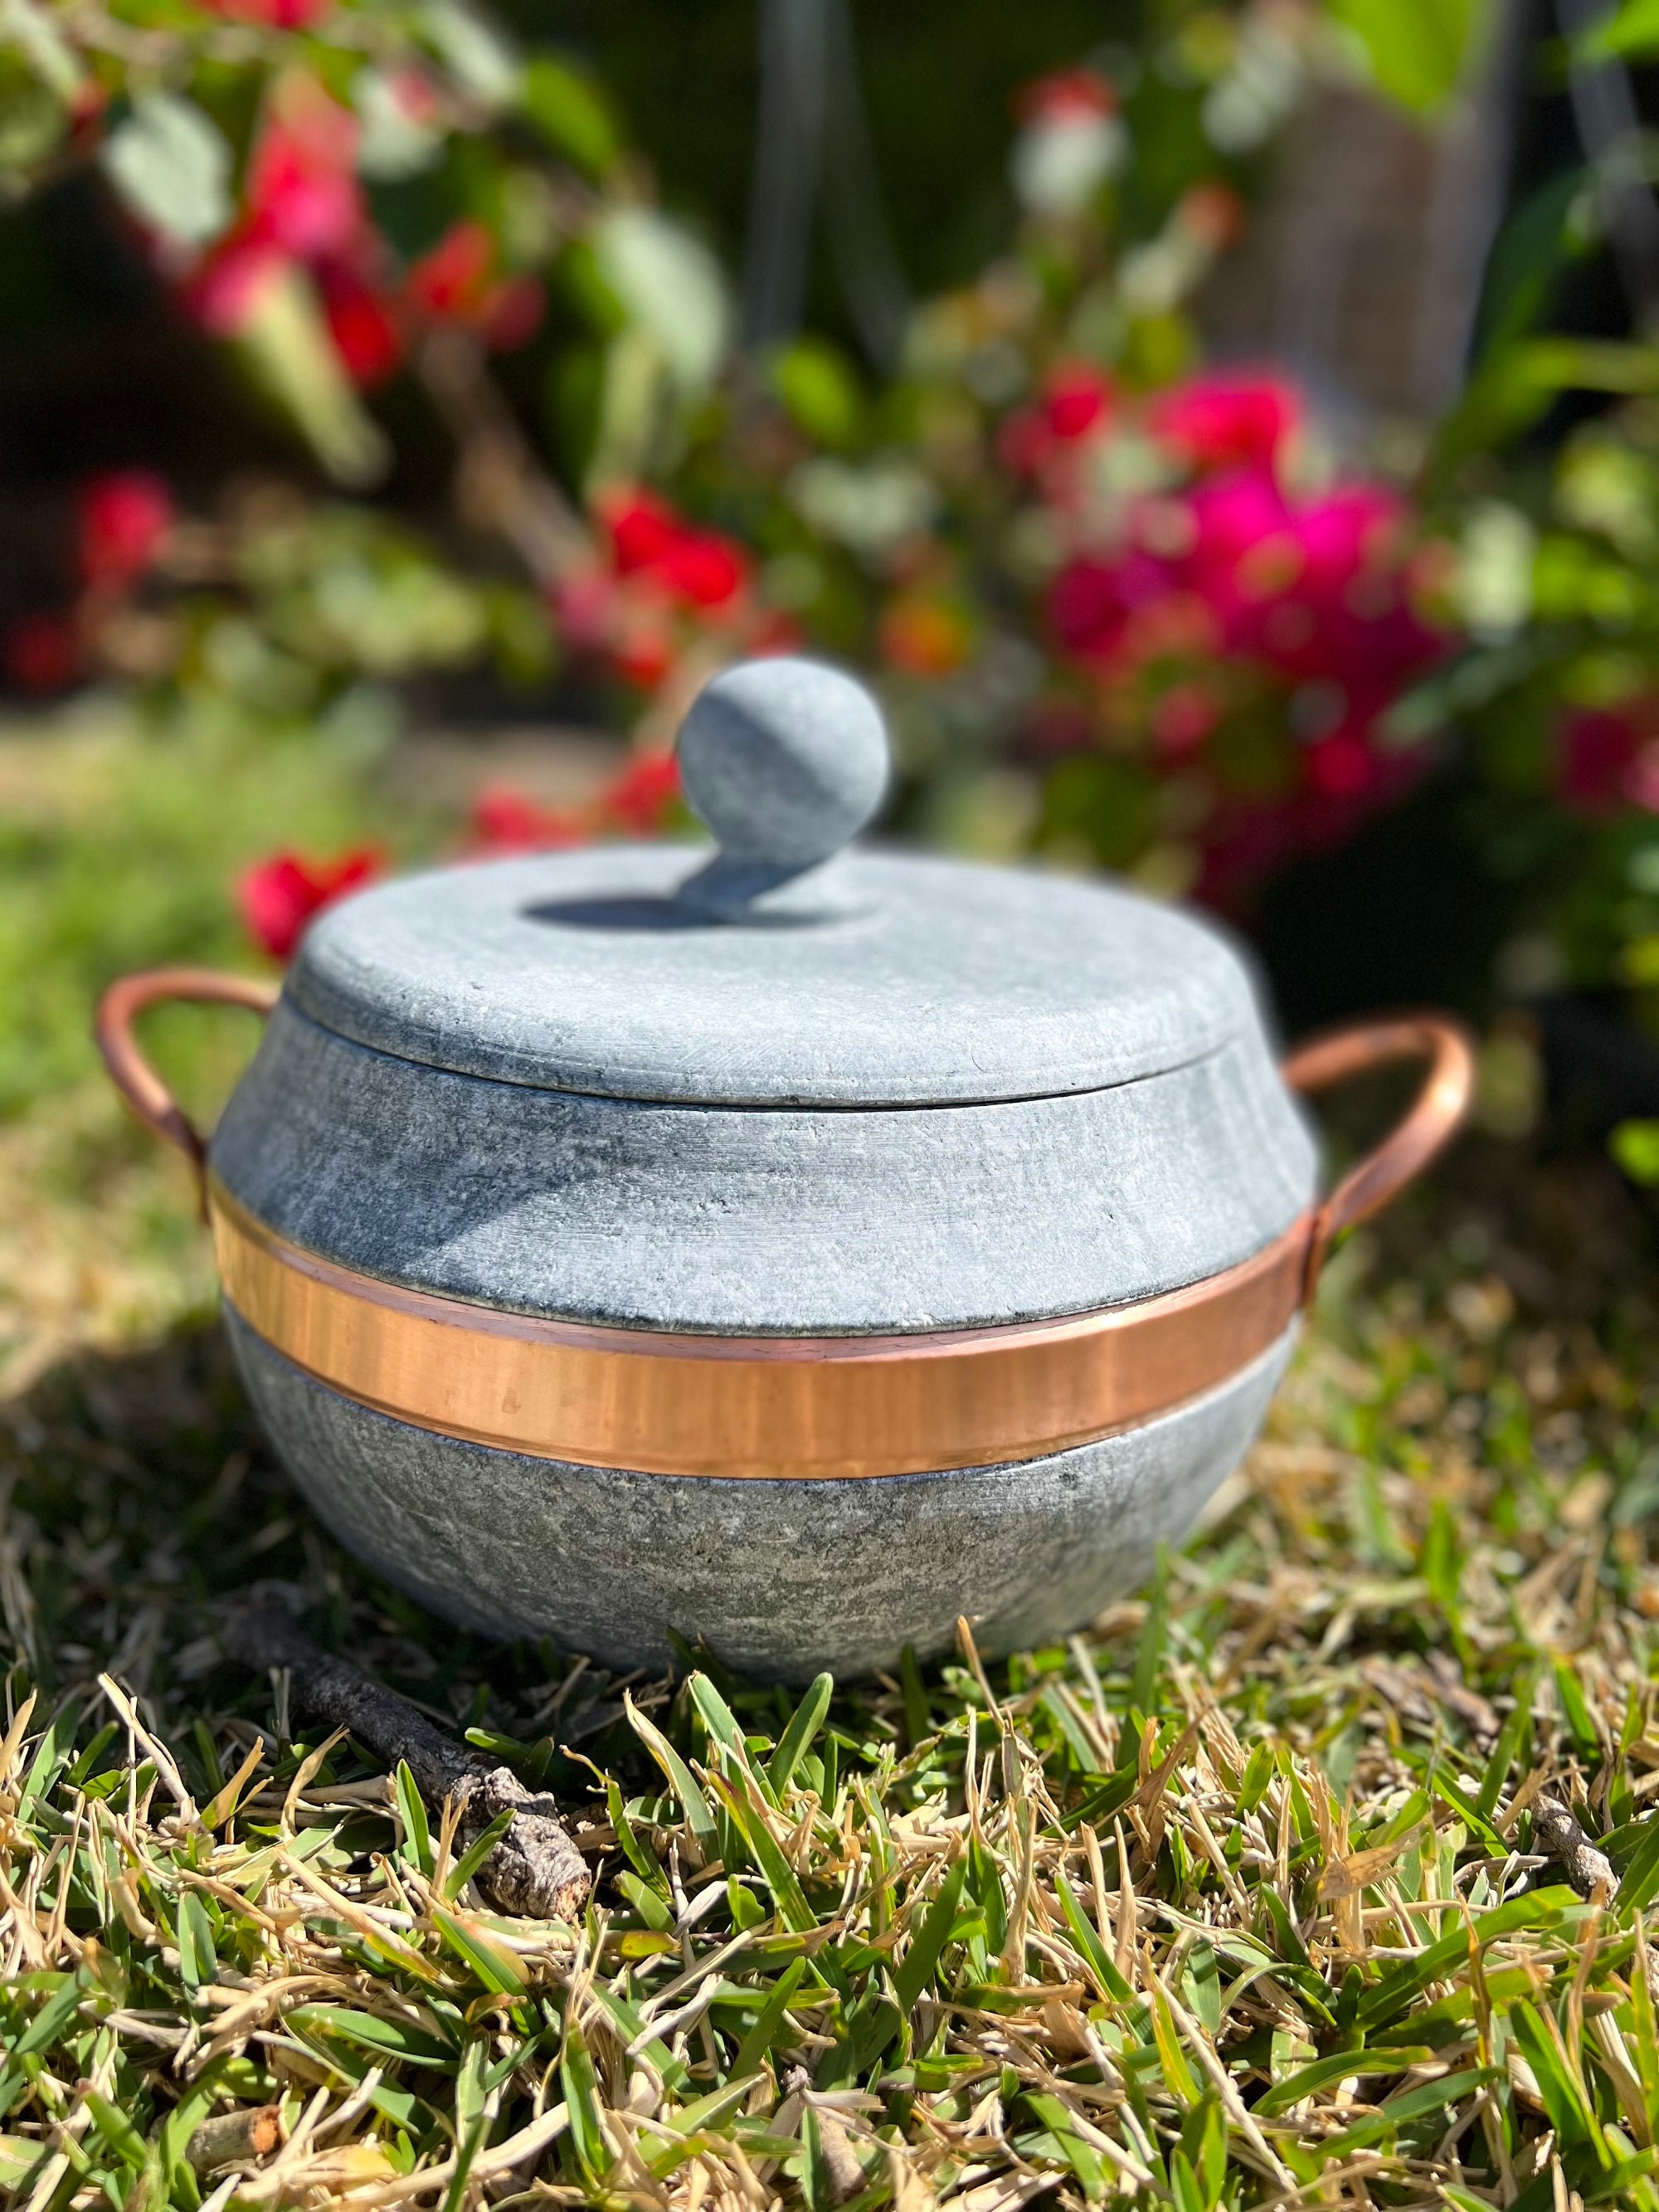 Hemoton Pot Ceramic Korean Cooking Earthenware Bowlsonion French Set  Cookware Lid Clay Stockpot Casserole Bowl Dolsot Bibimbap